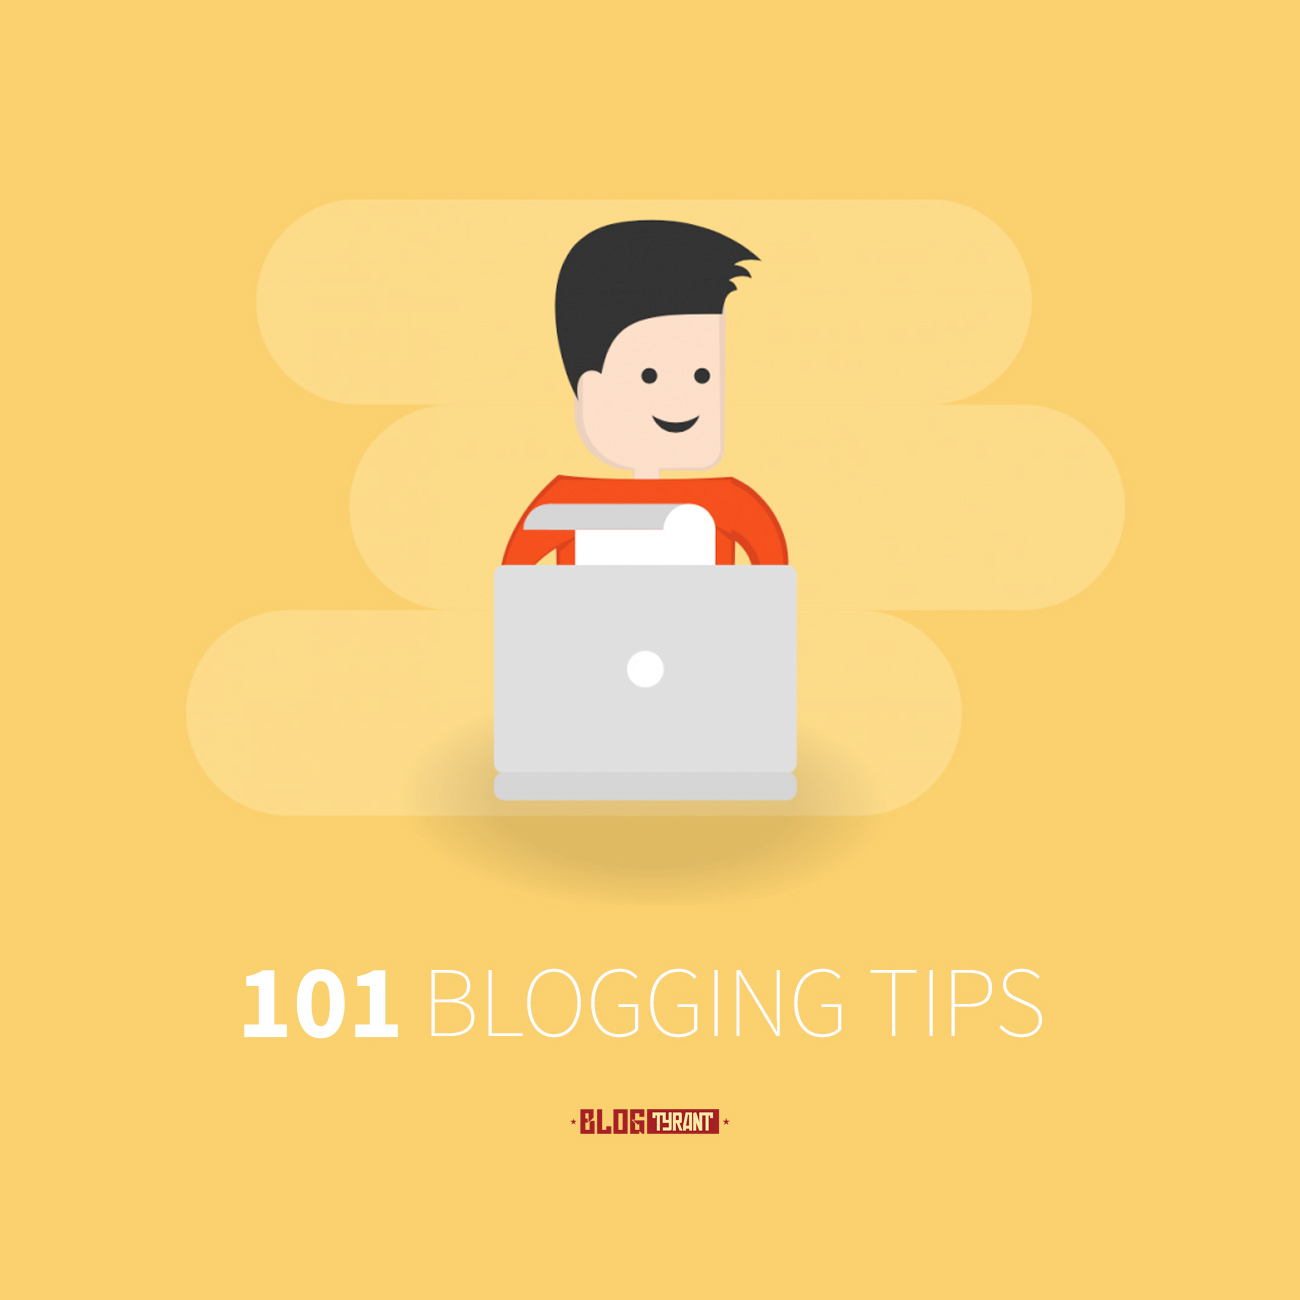 101 blogging tips